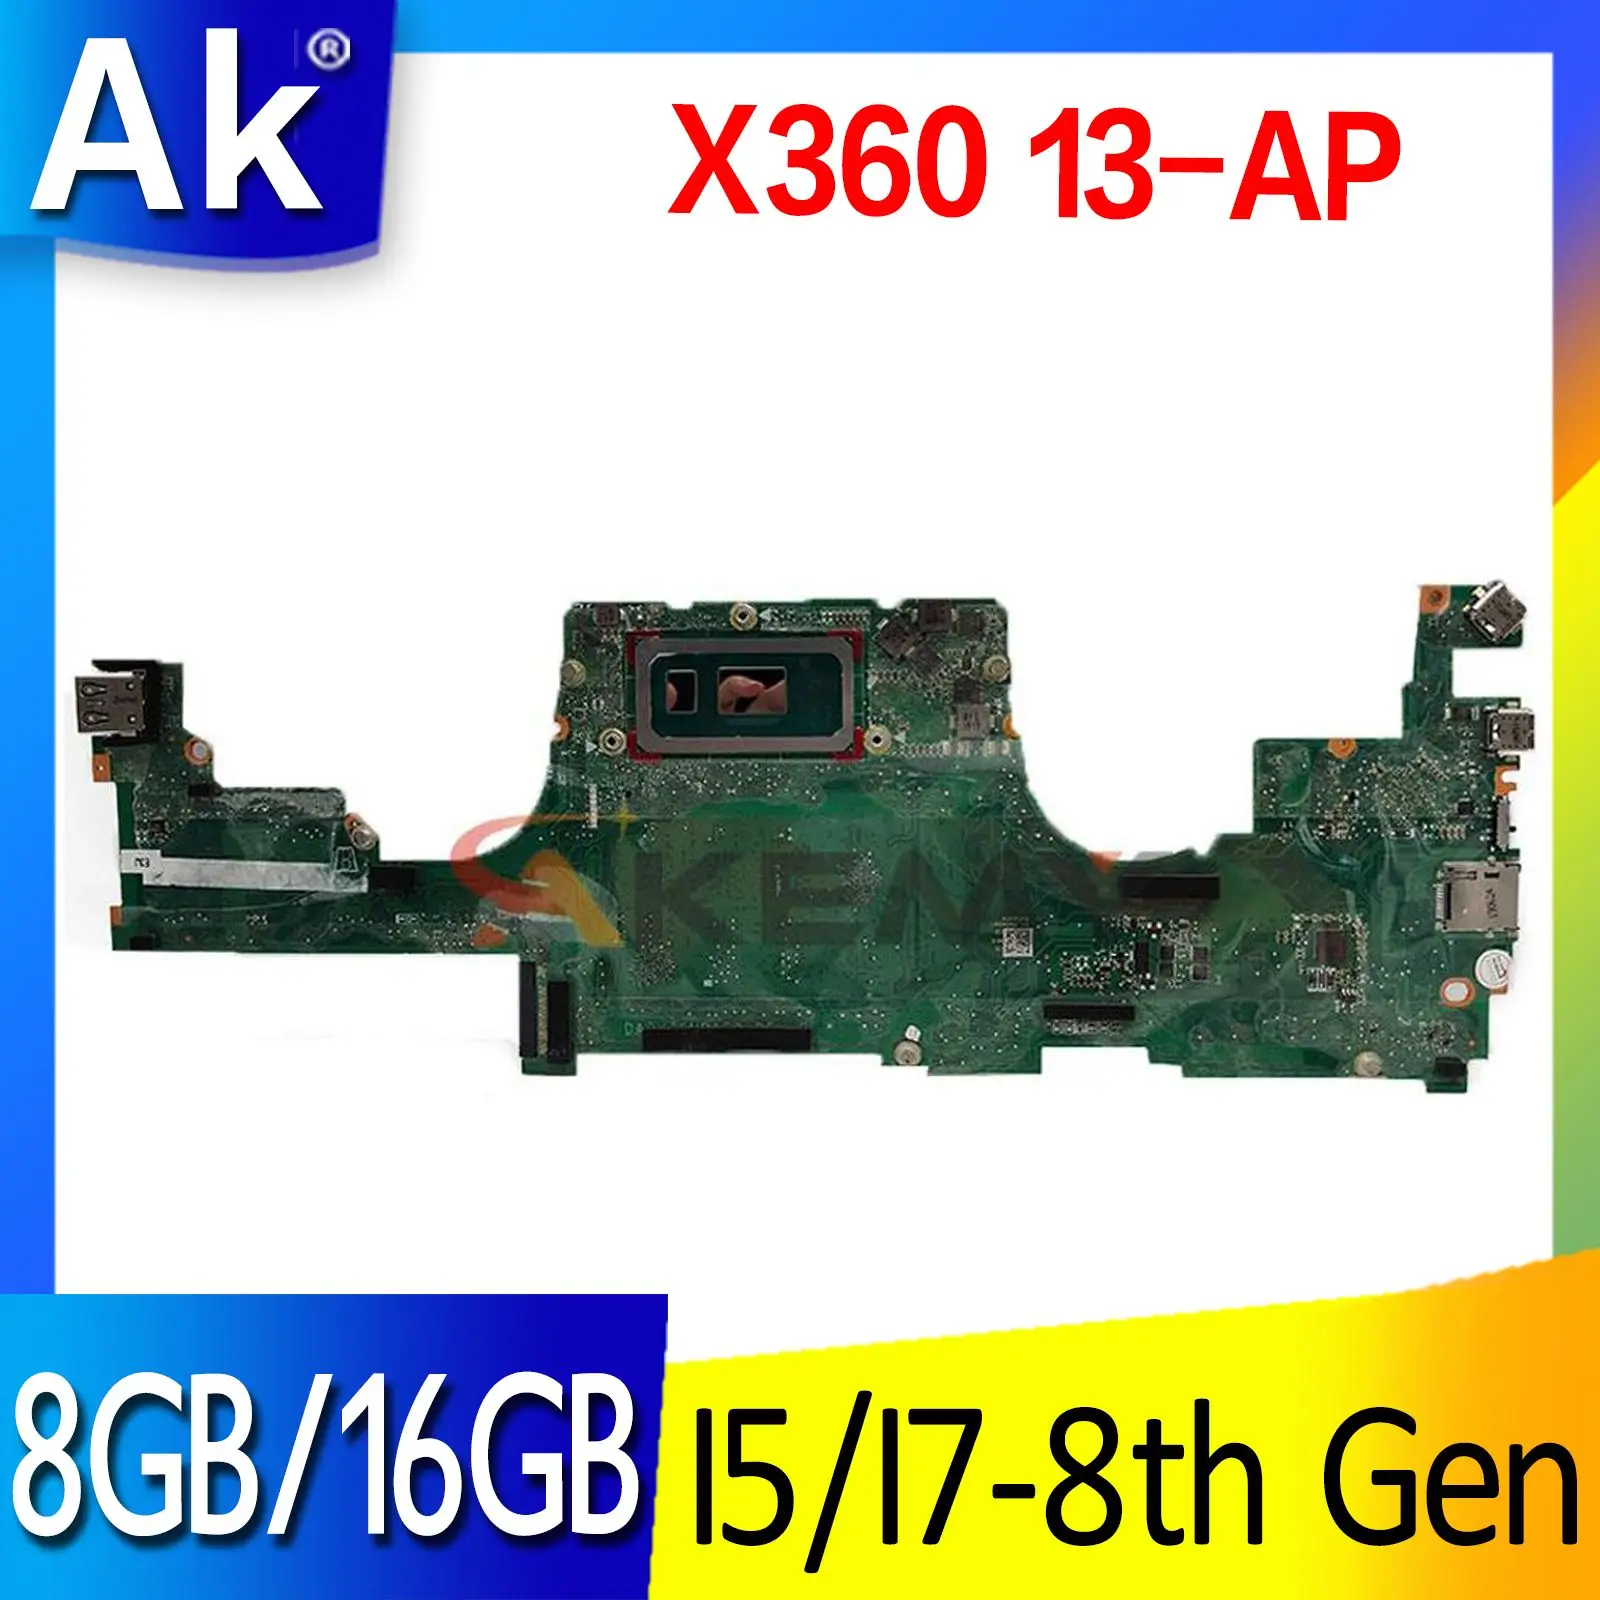 

For HP SPECTRE X360 13-AP Laptop Motherboard mainboard DA0X36MBAD0 DA0X36MBAE0 motherboard W/ I5 I7 8th Gen CPU 8GB 16GB RAM